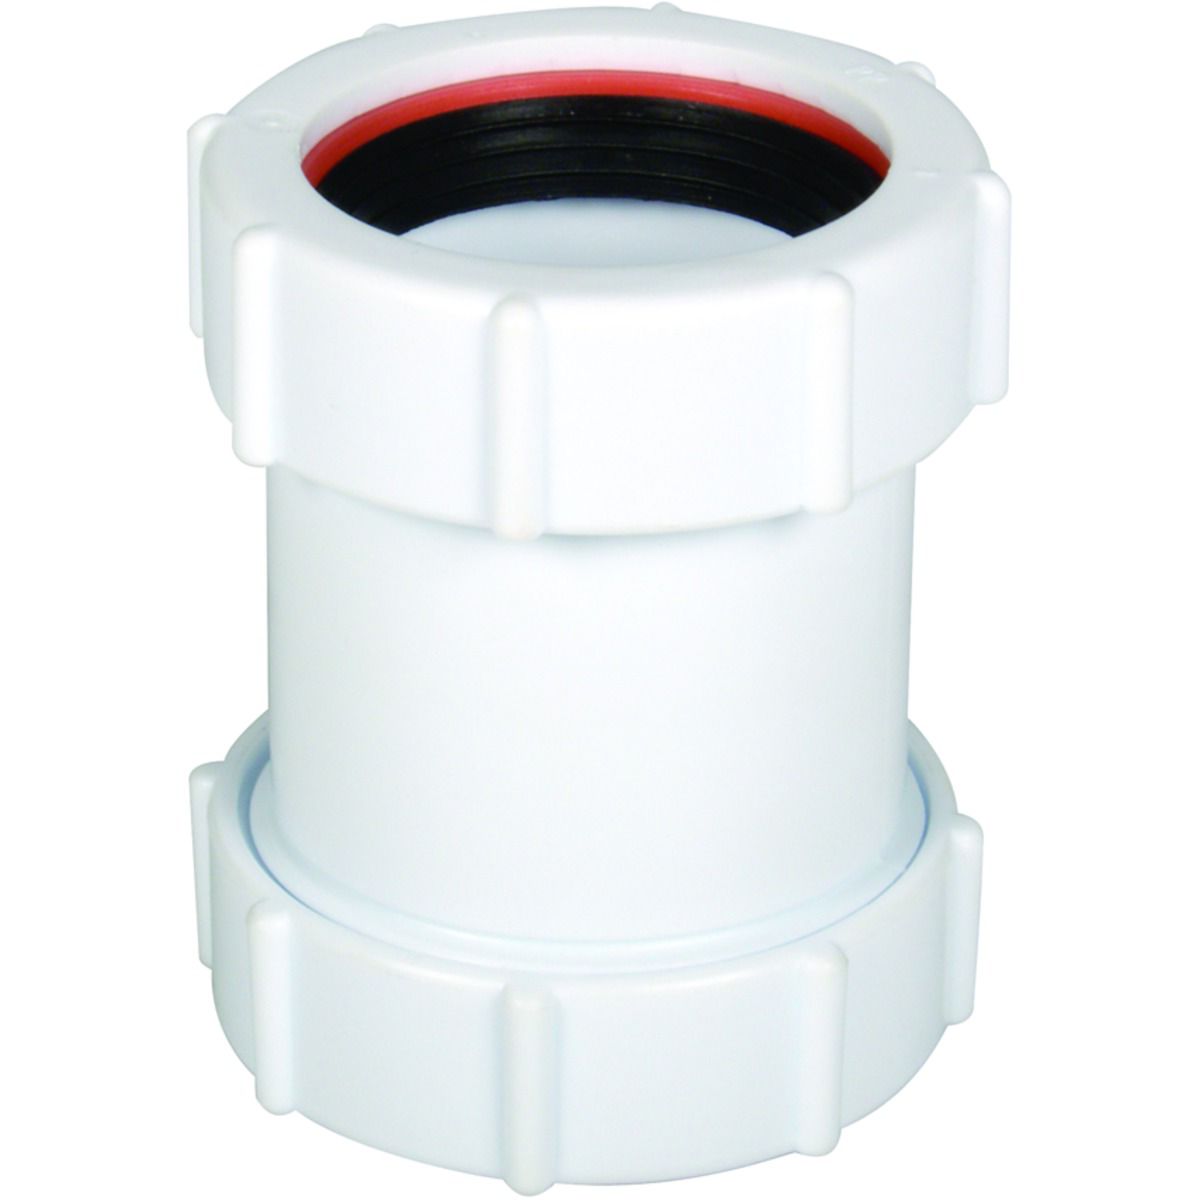 White PVC Flexible WC Pan Connector Flexi Toilet Waste Long 250mm-500mm